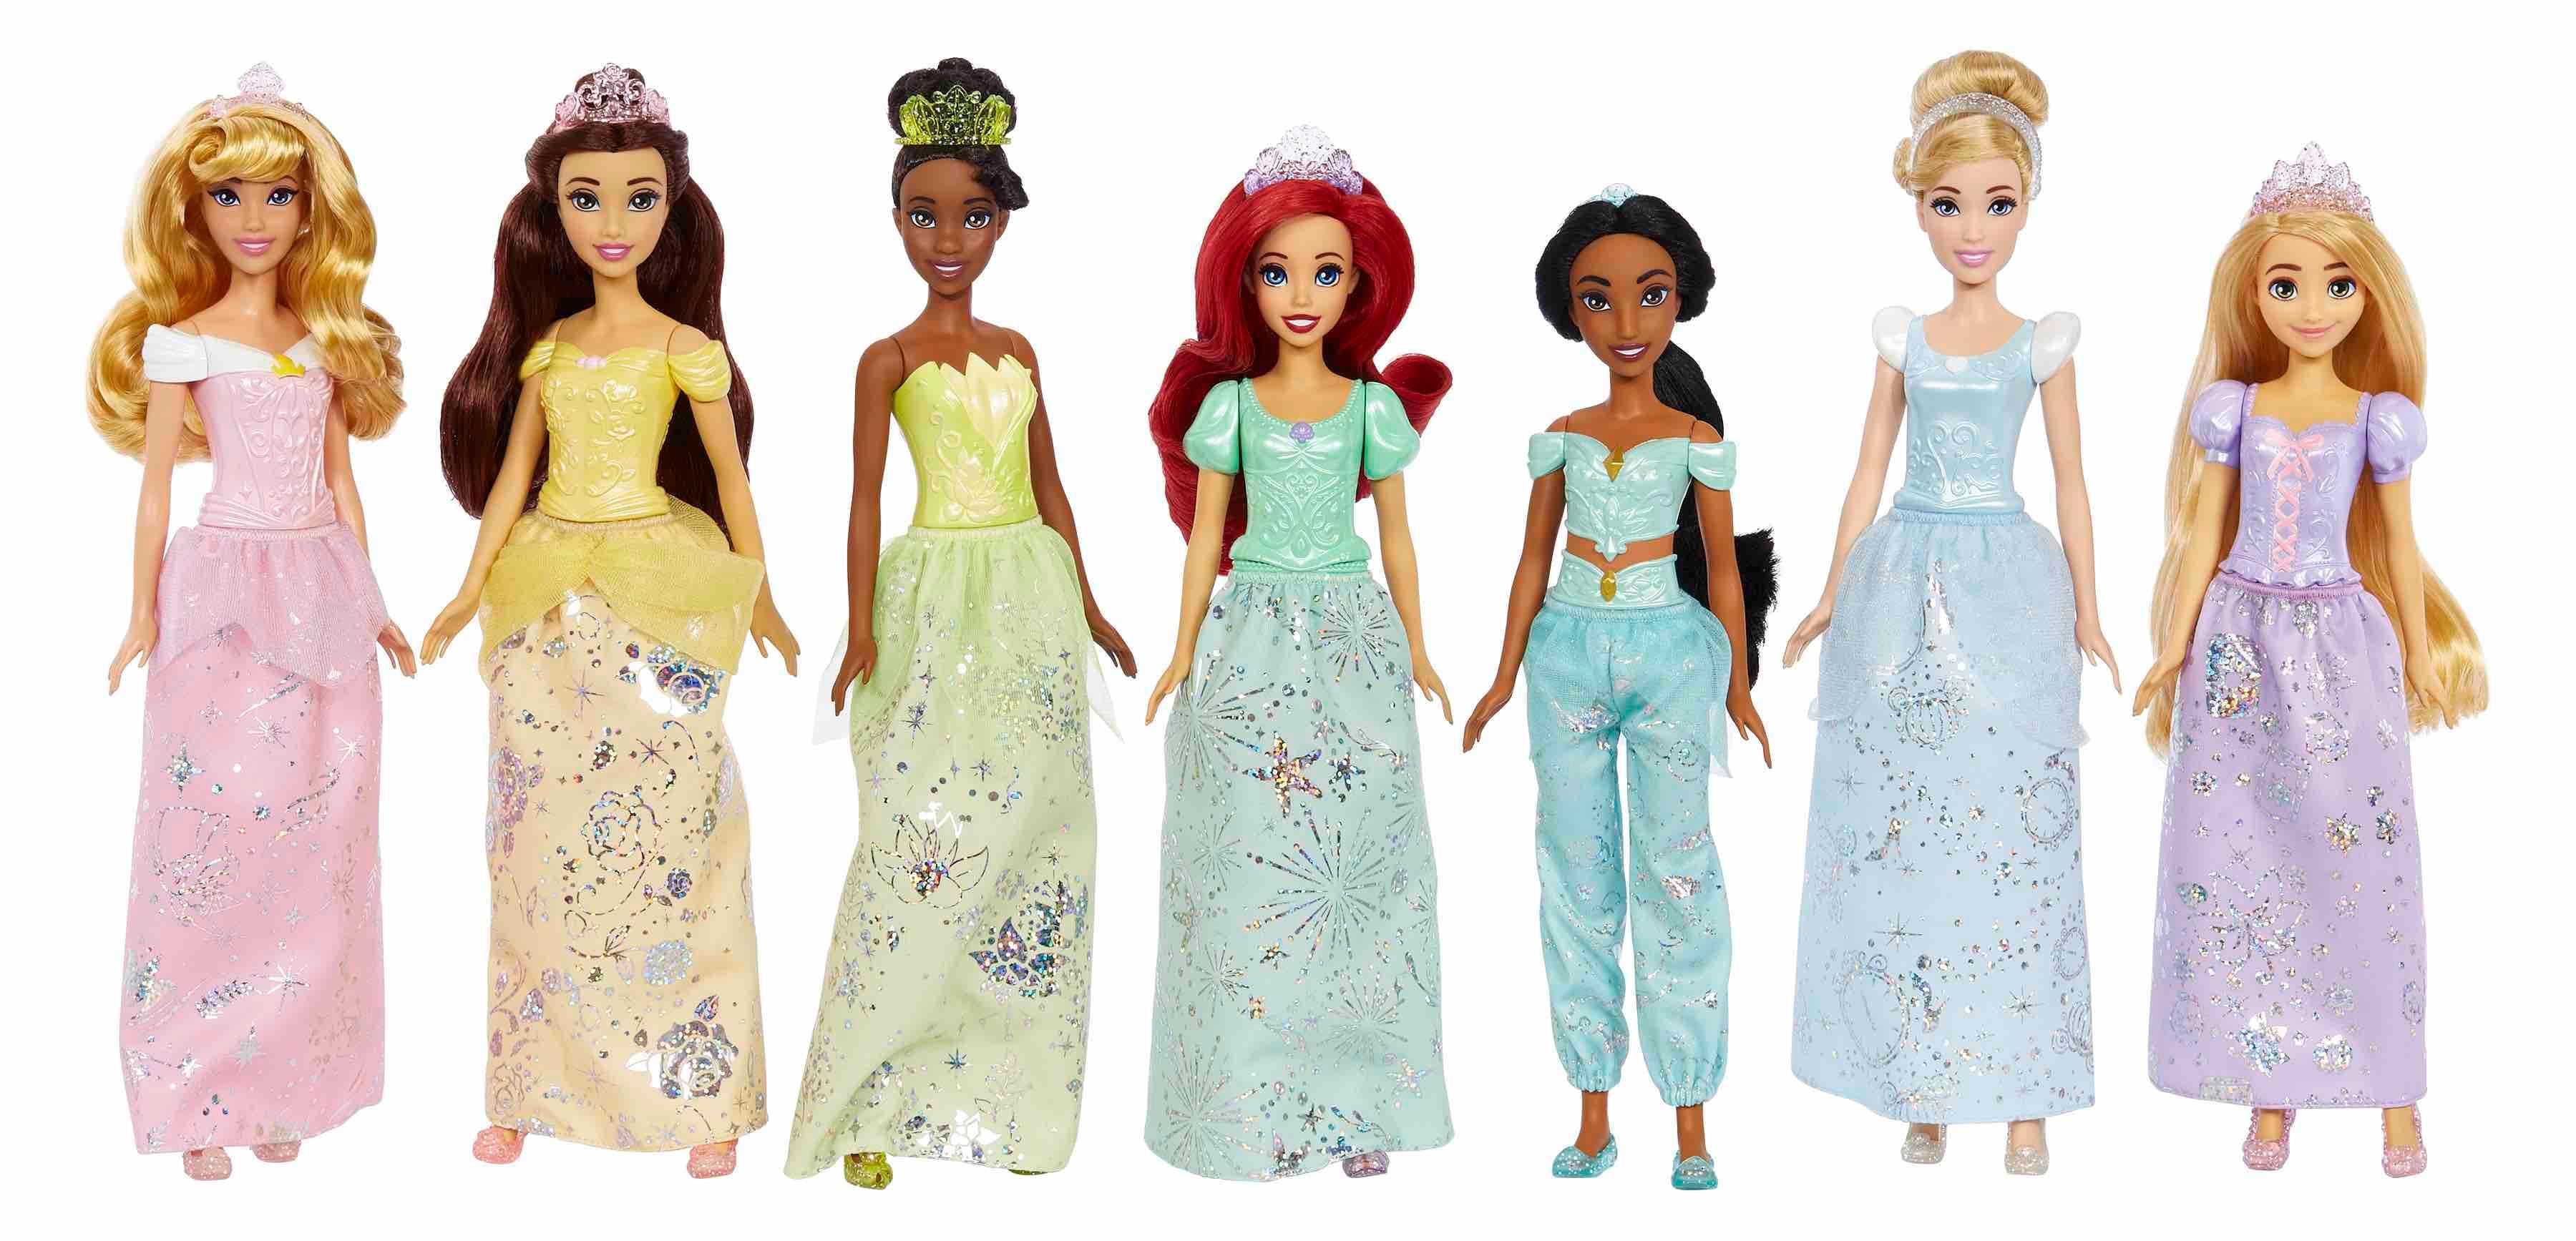 Mattel Brings Disney Princess and Frozen Characters to Life - 4aKid